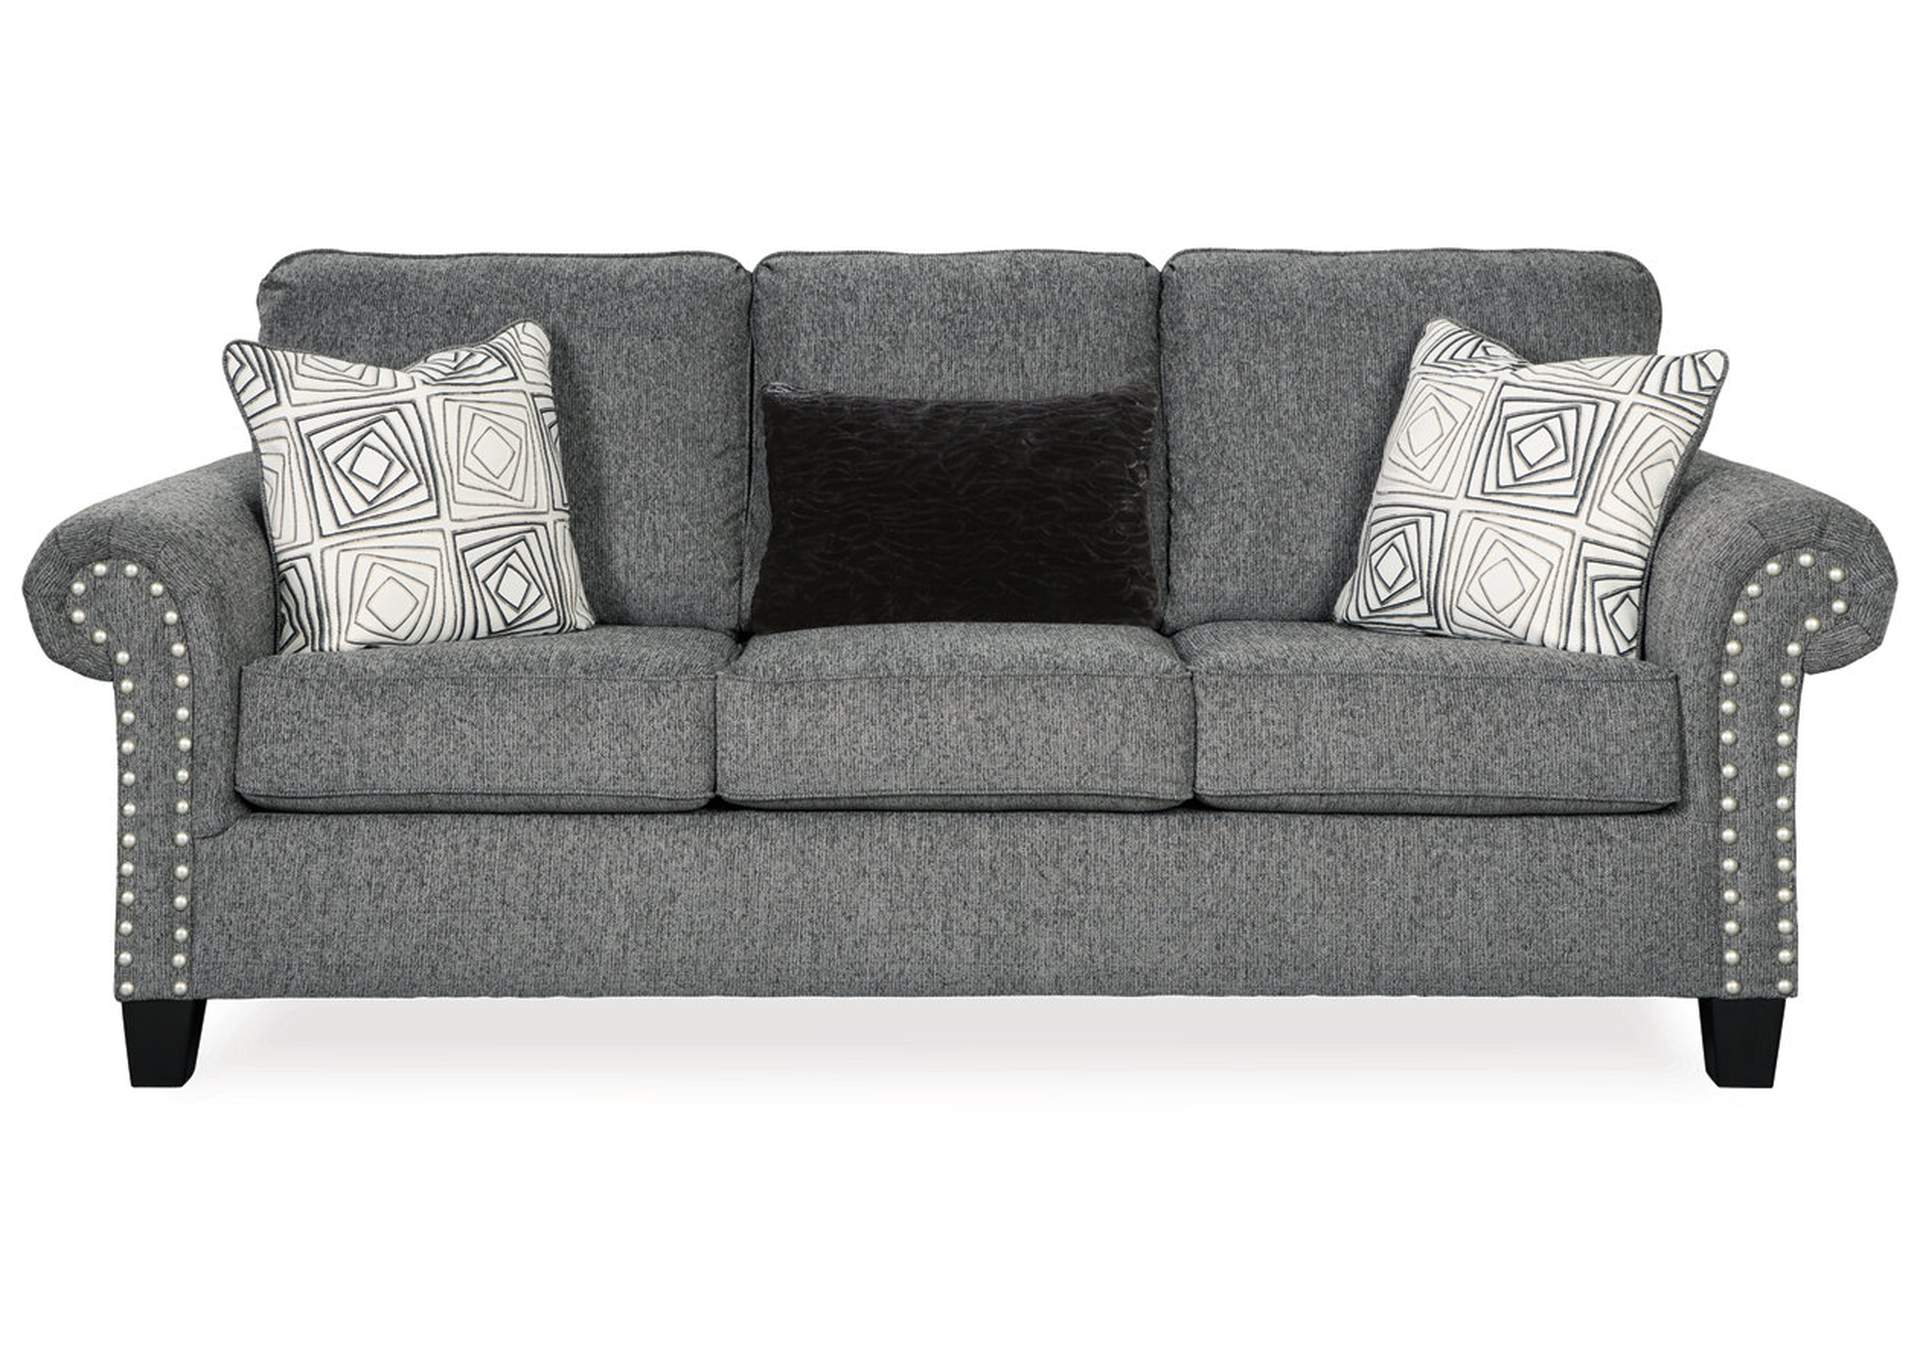 Agleno Sofa,Benchcraft